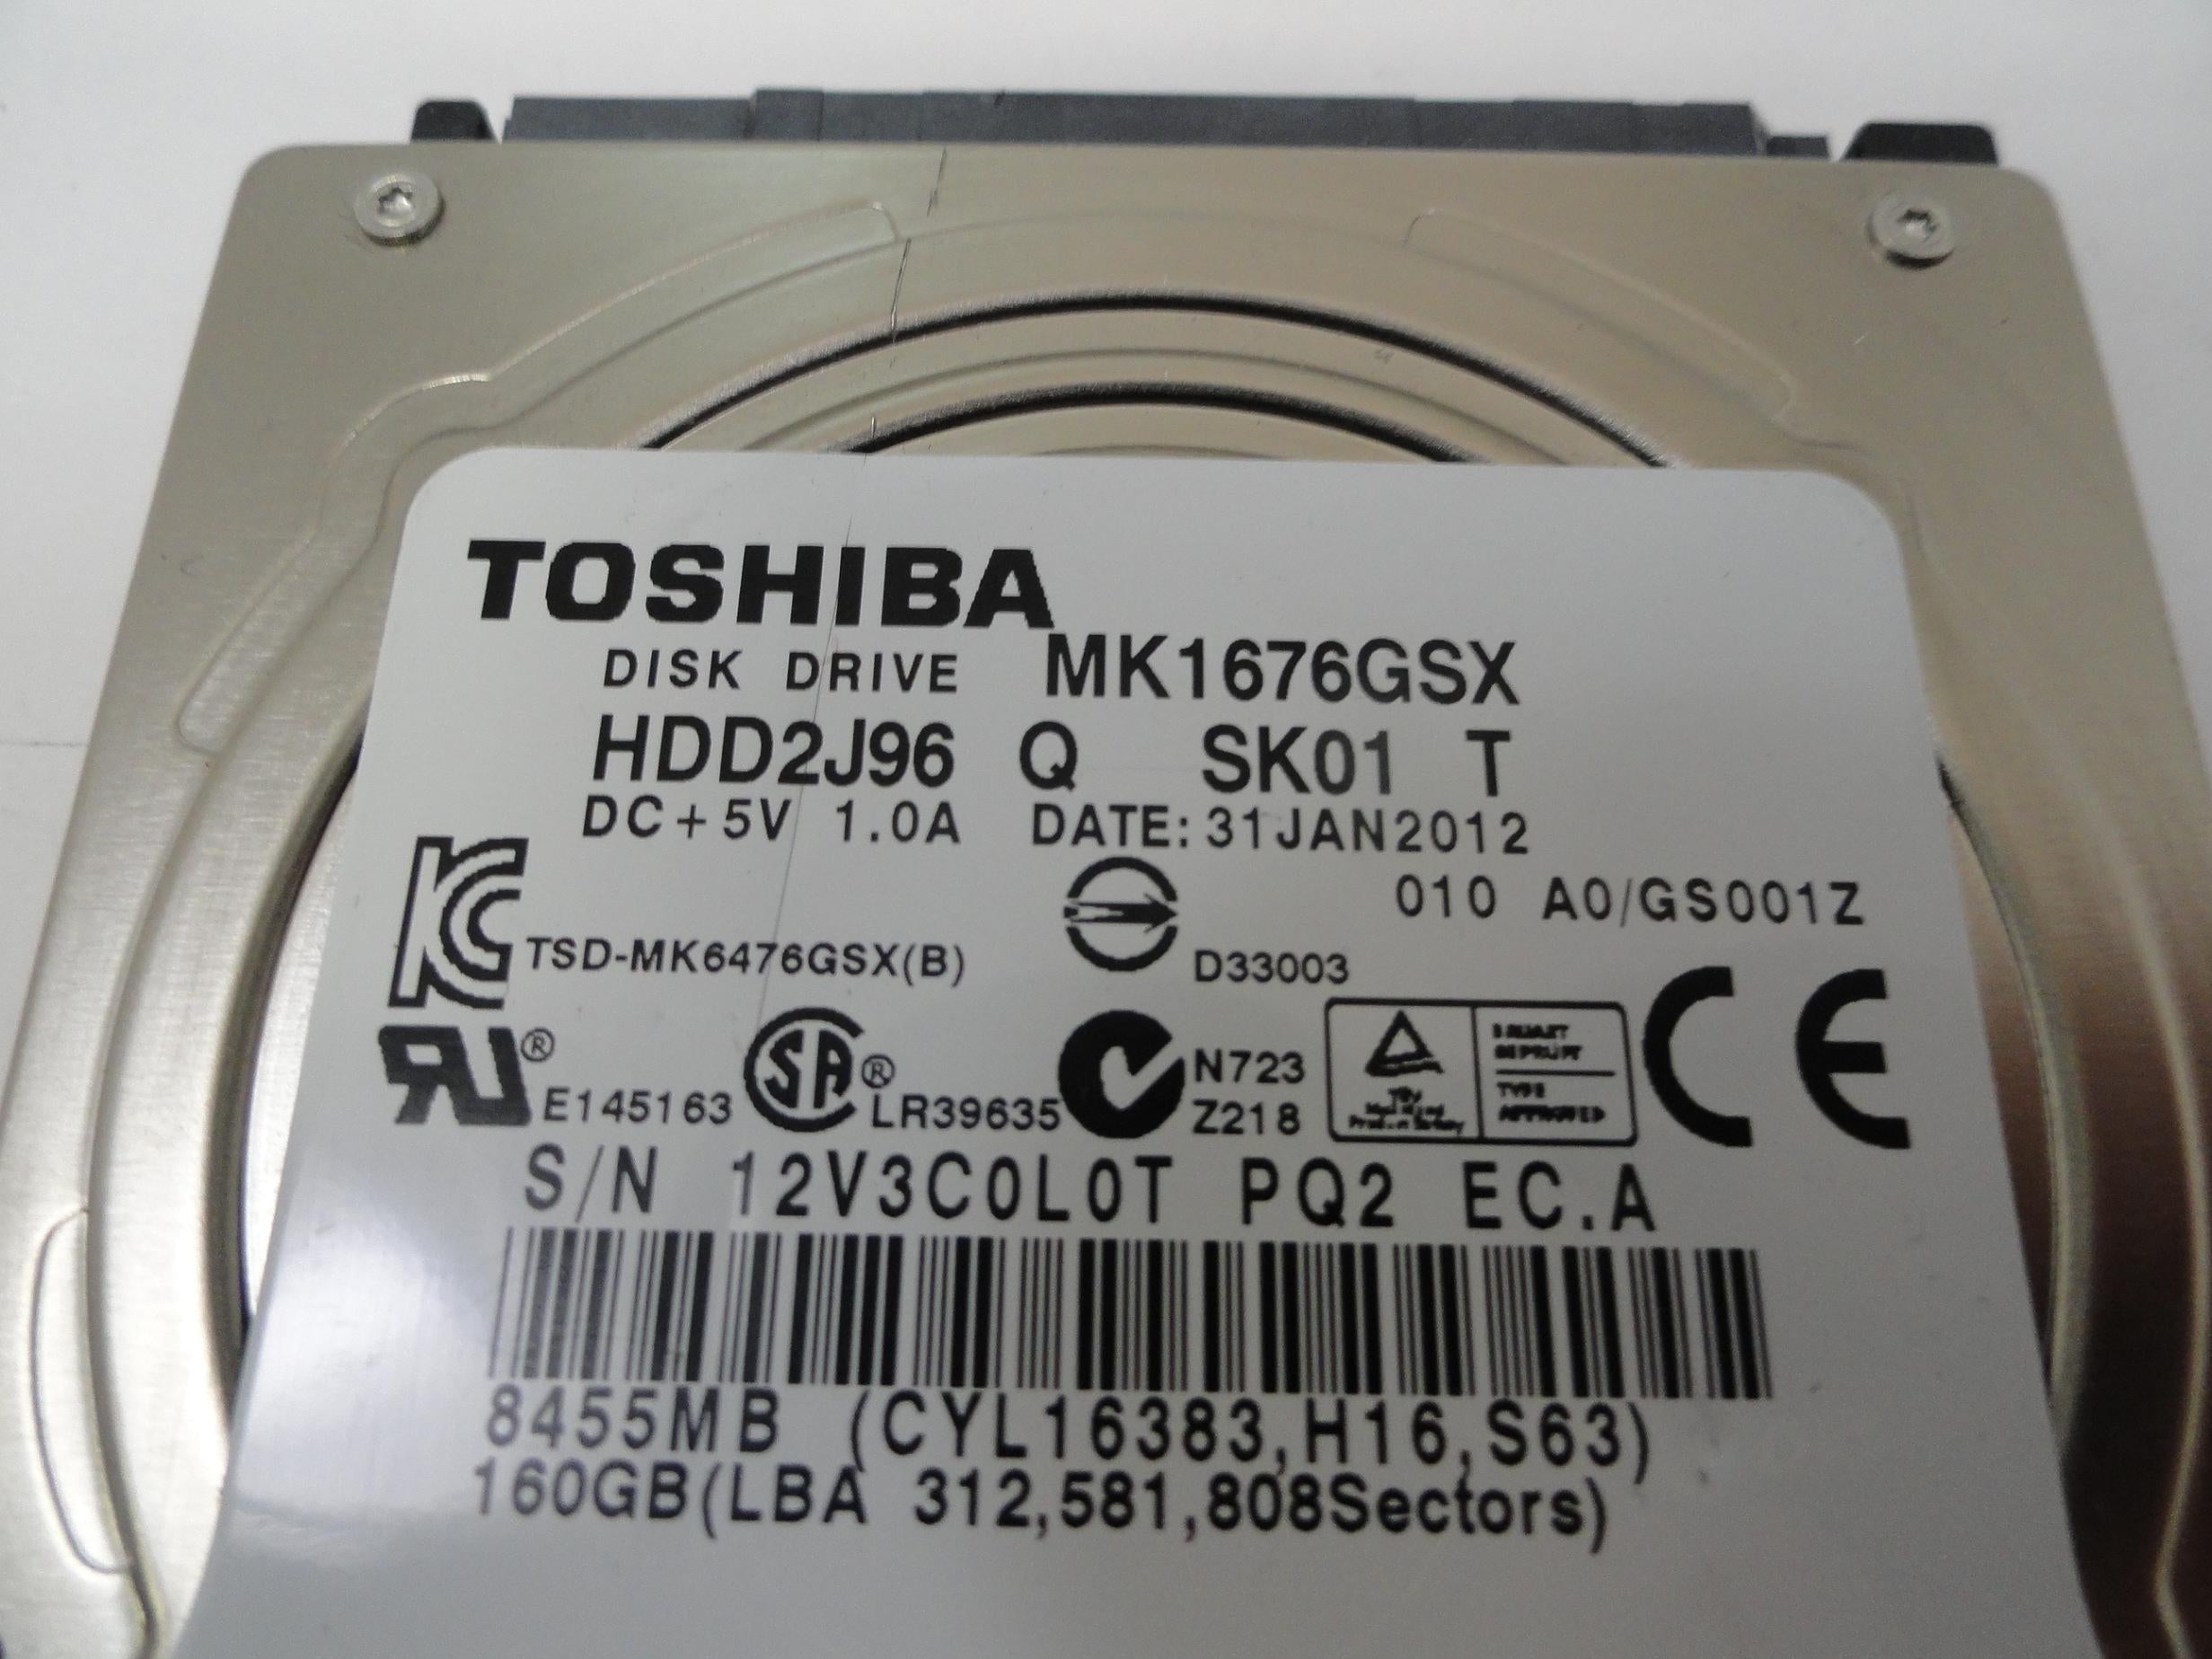 HDD2J96 - Toshiba 160Gb SATA 5400rpm 2.5in HDD - ASIS